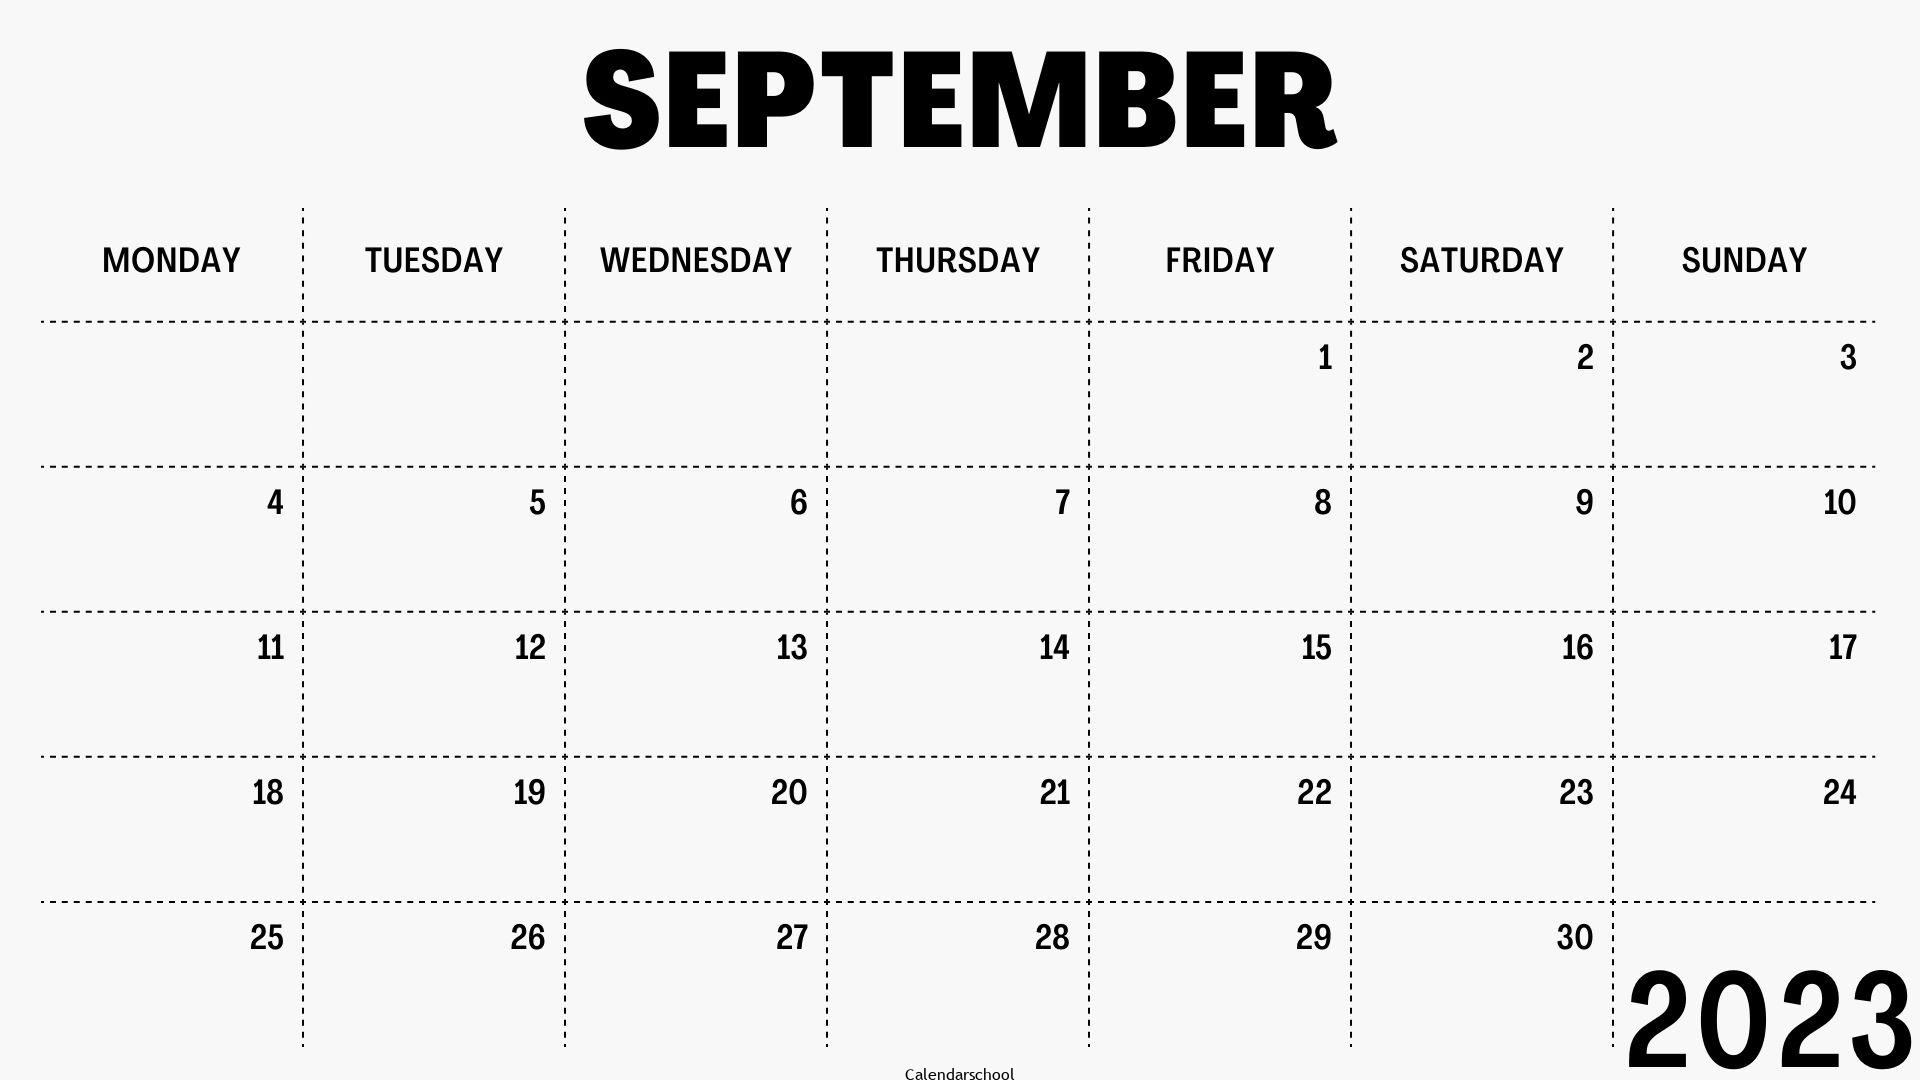 September 2023 Weekly Calendar Template